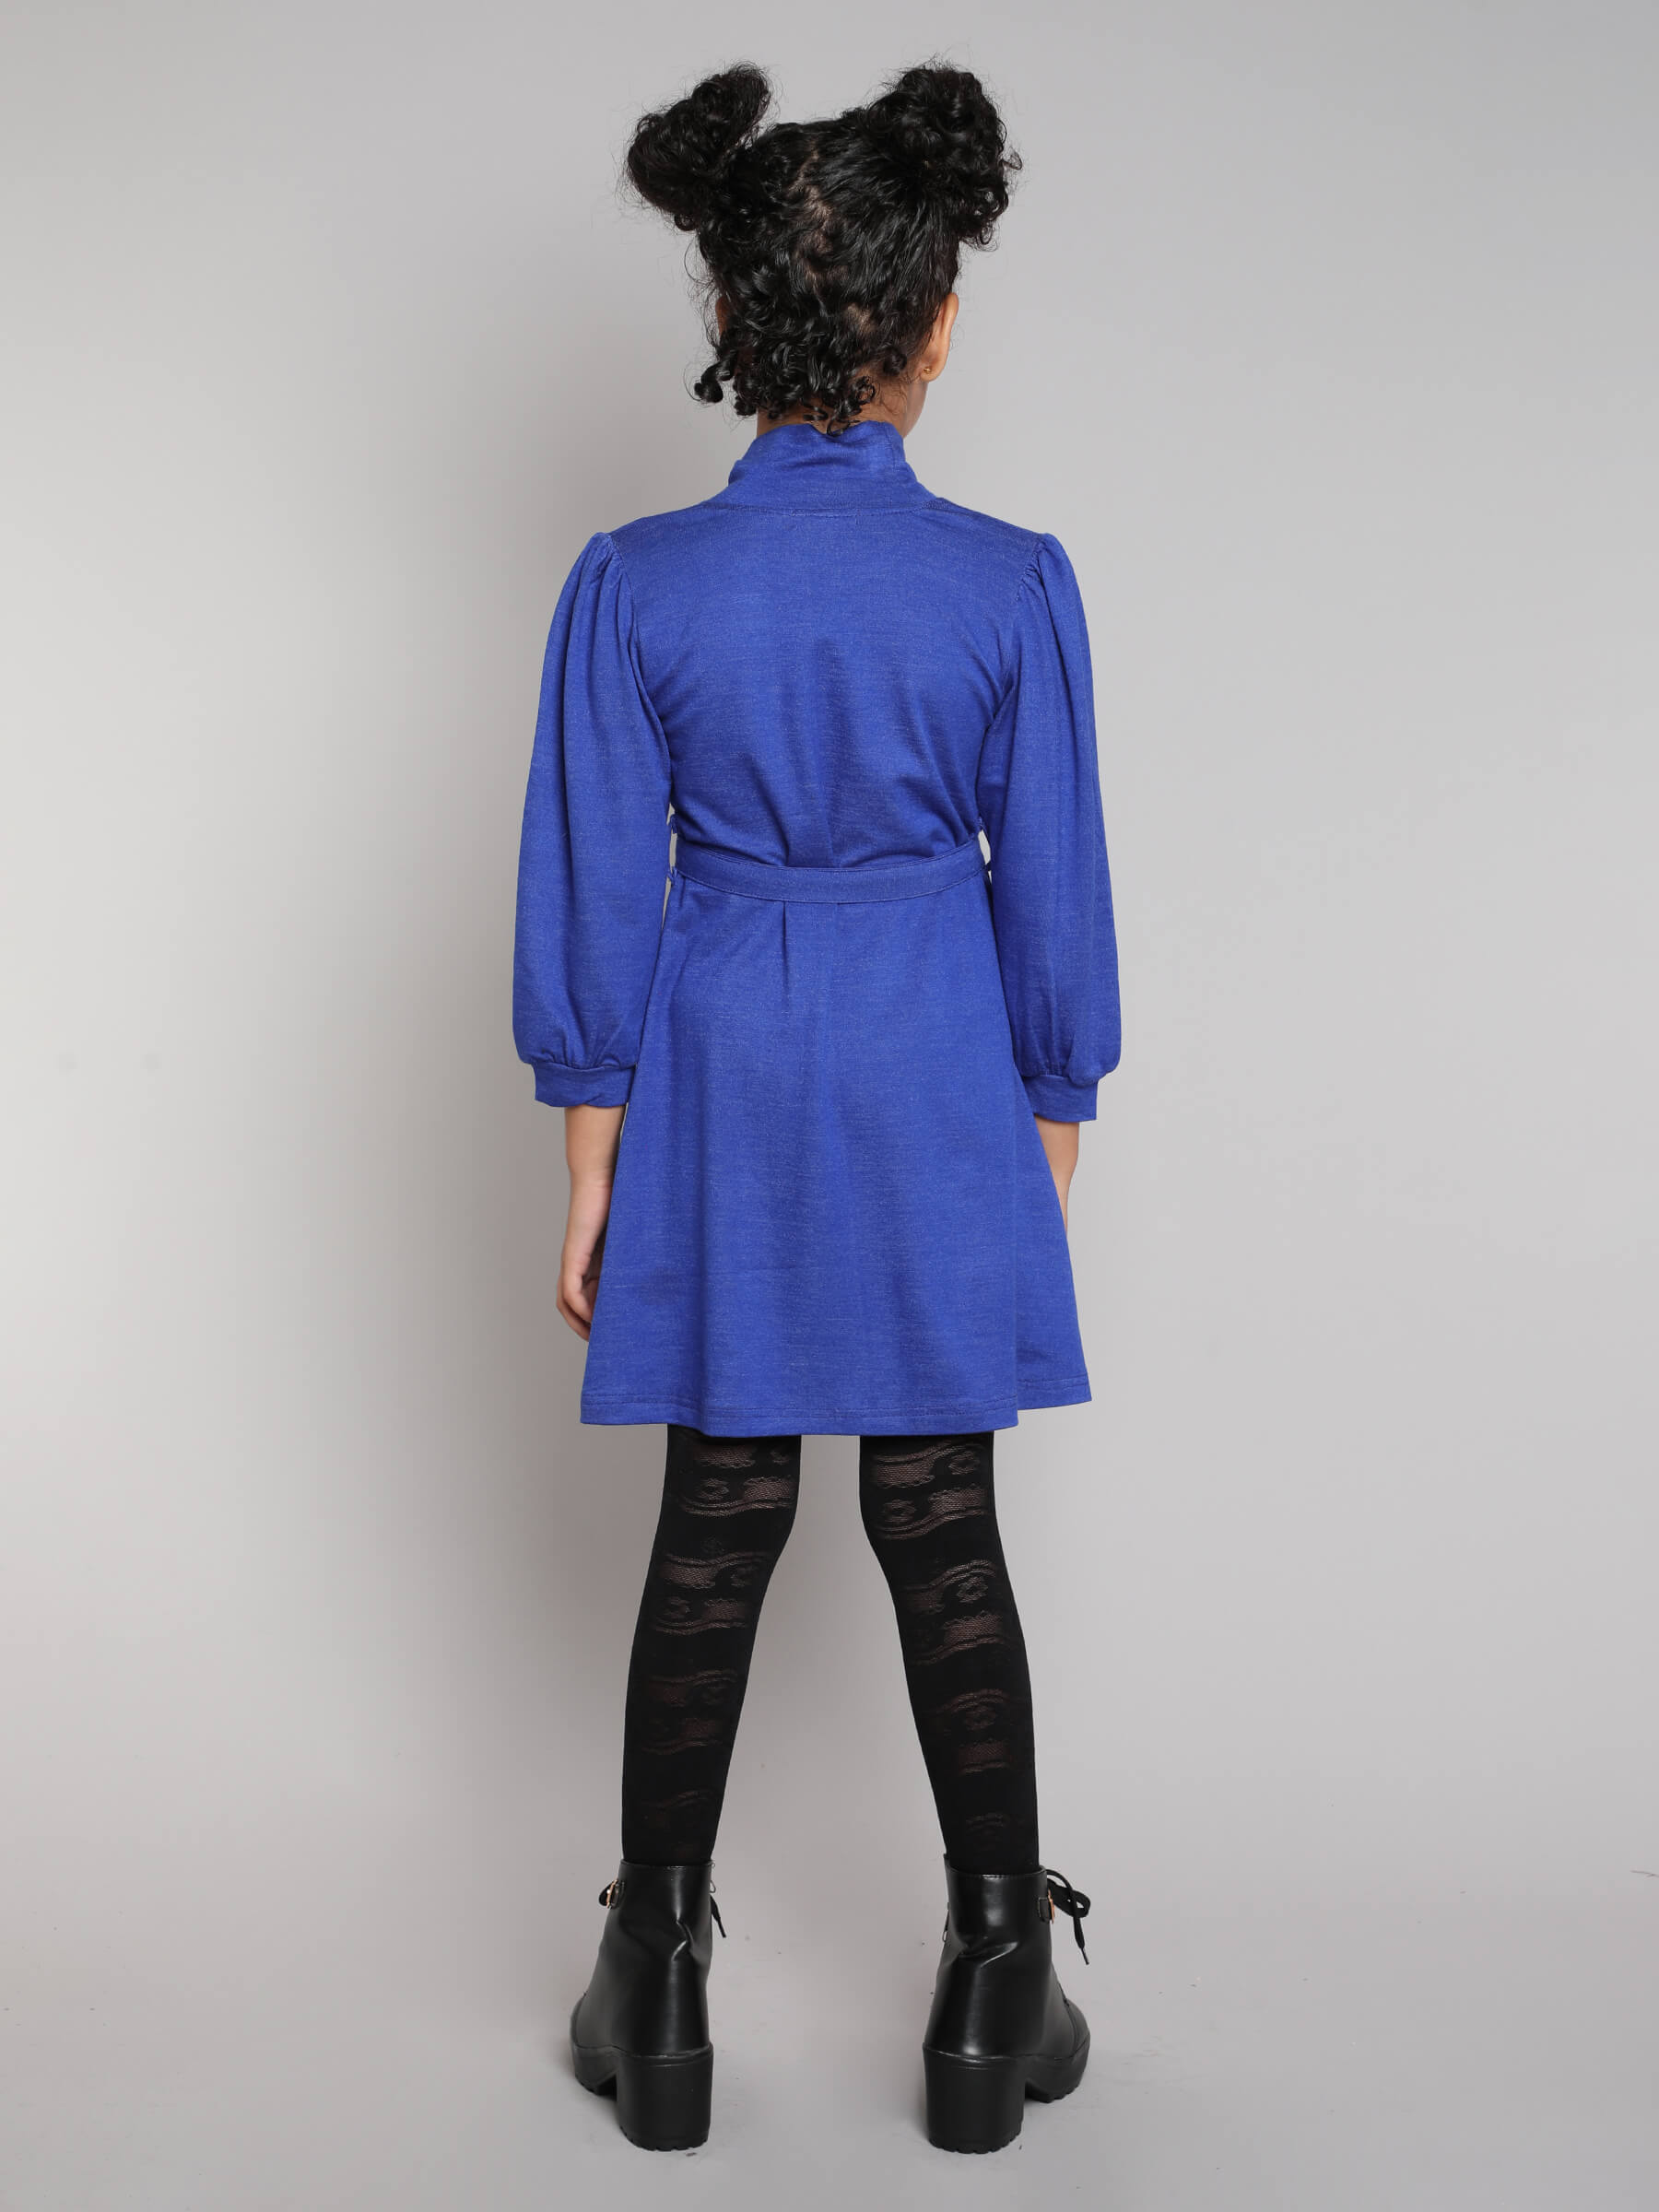 Shop High Neck Full Sleeves A-Line Dress With Belt-Royal Blue Online